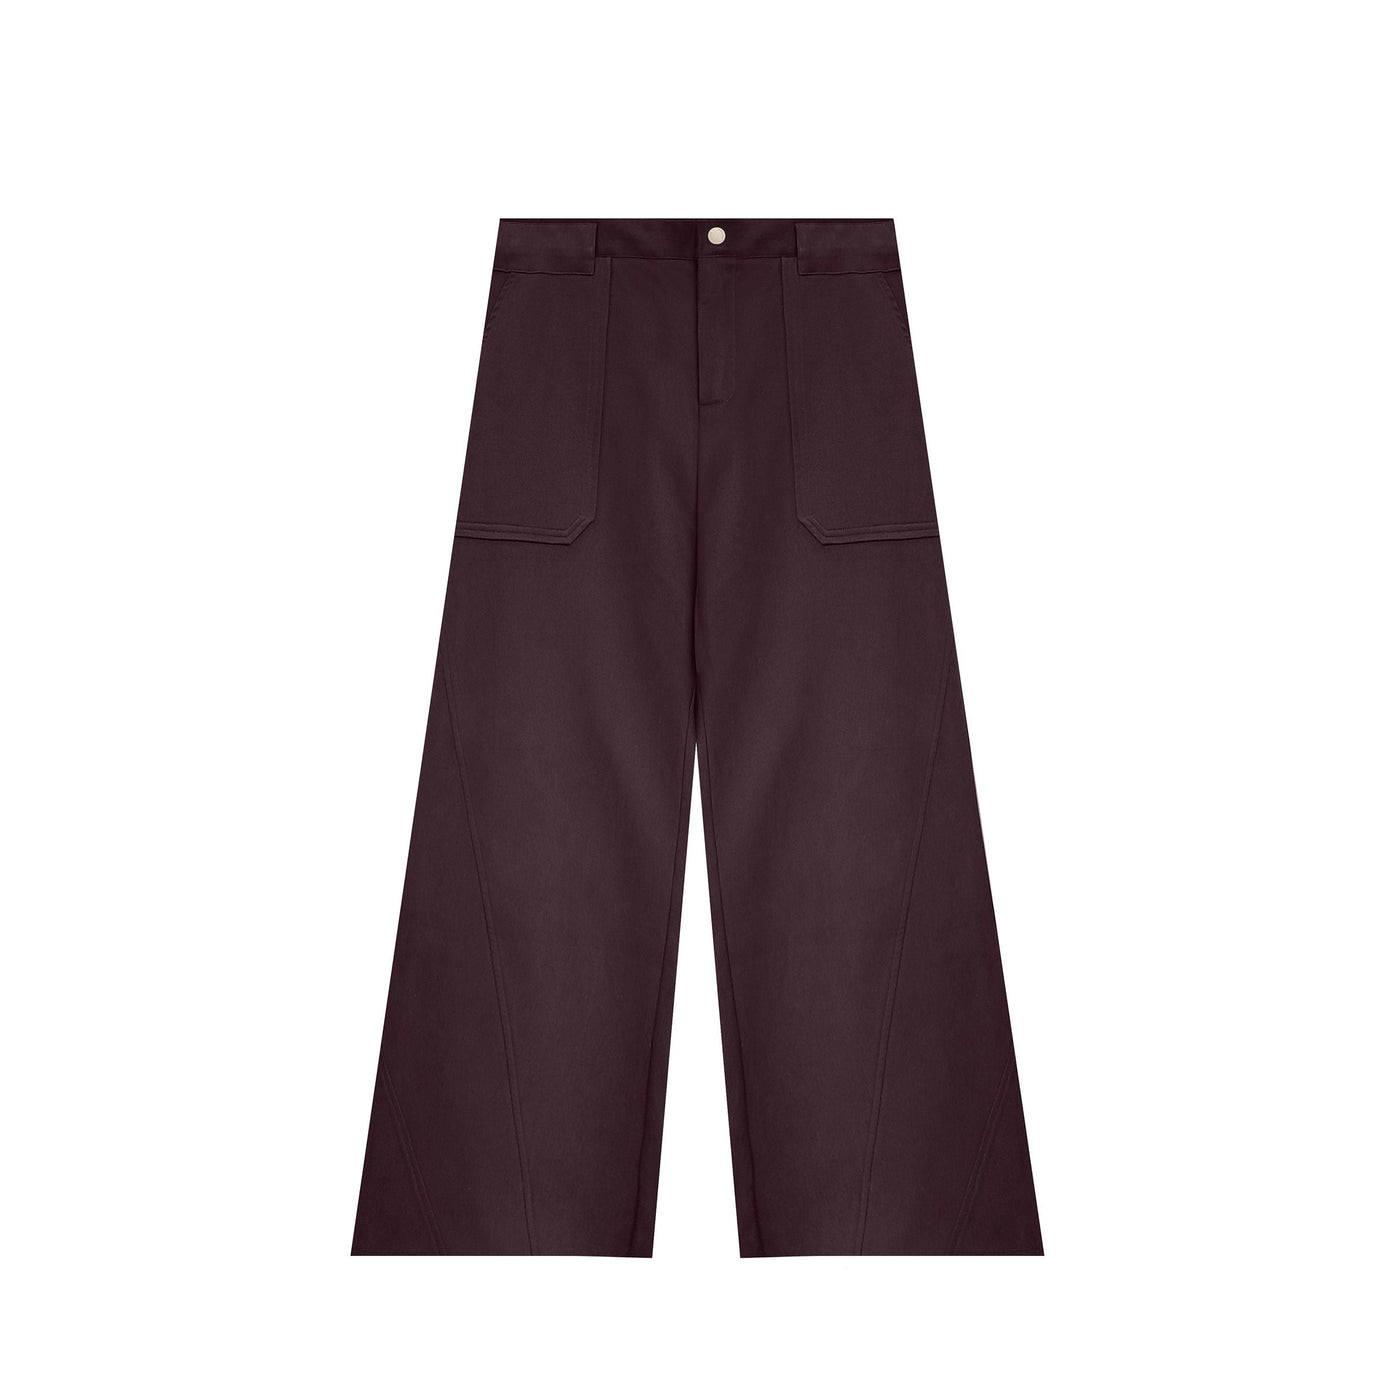 49PERCENT Wide Pocket Subtle Lines Pants Korean Street Fashion Pants By 49PERCENT Shop Online at OH Vault